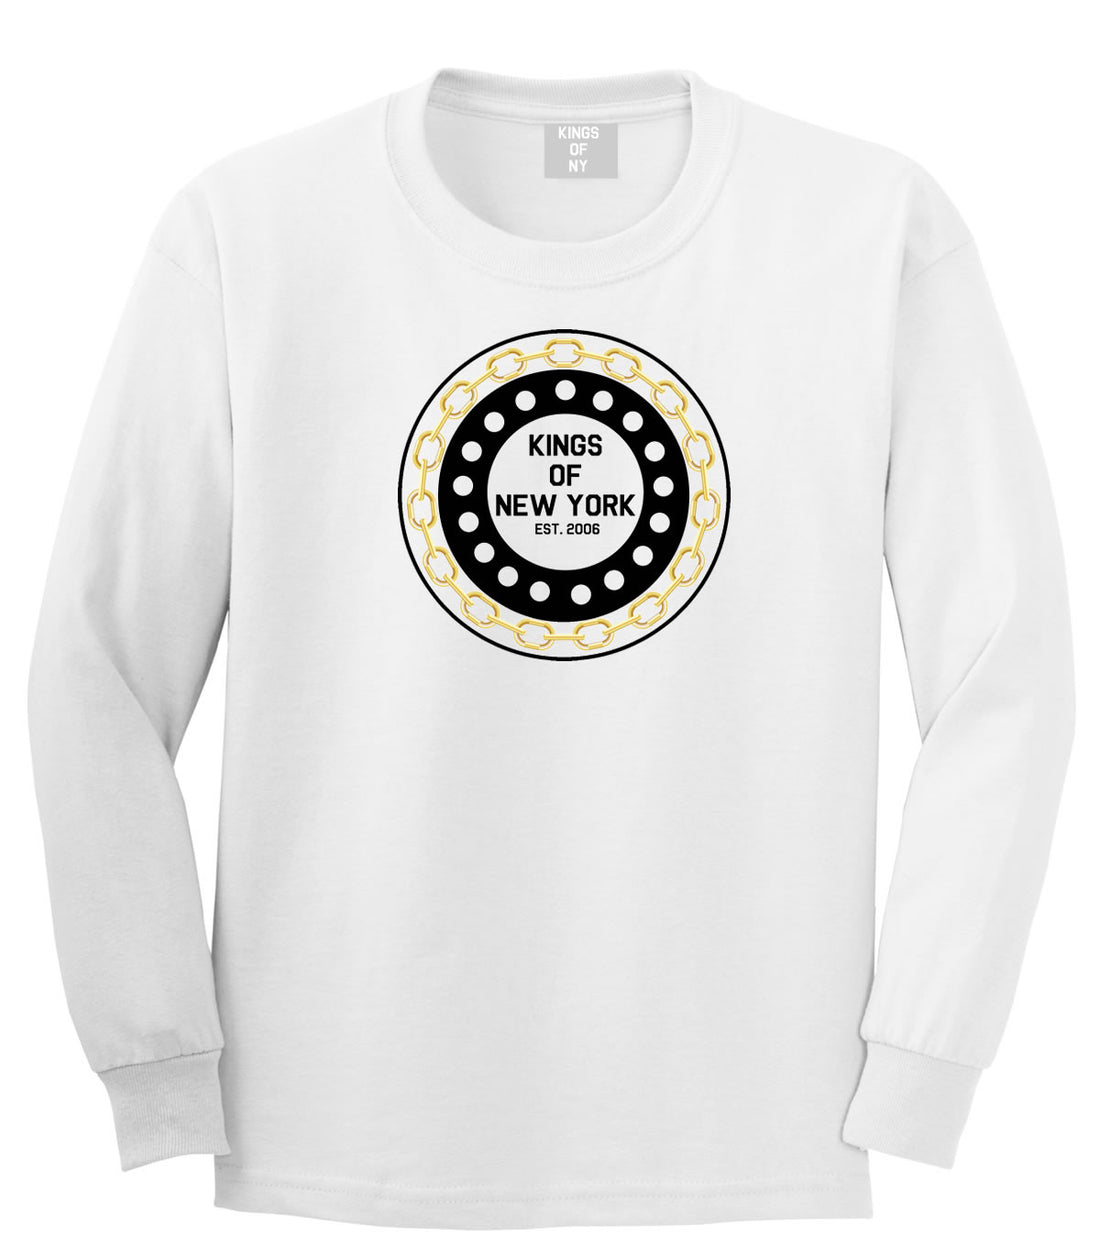 Chain Logo New York Brooklyn Bronx Long Sleeve Boys Kids T-Shirt in White by Kings Of NY